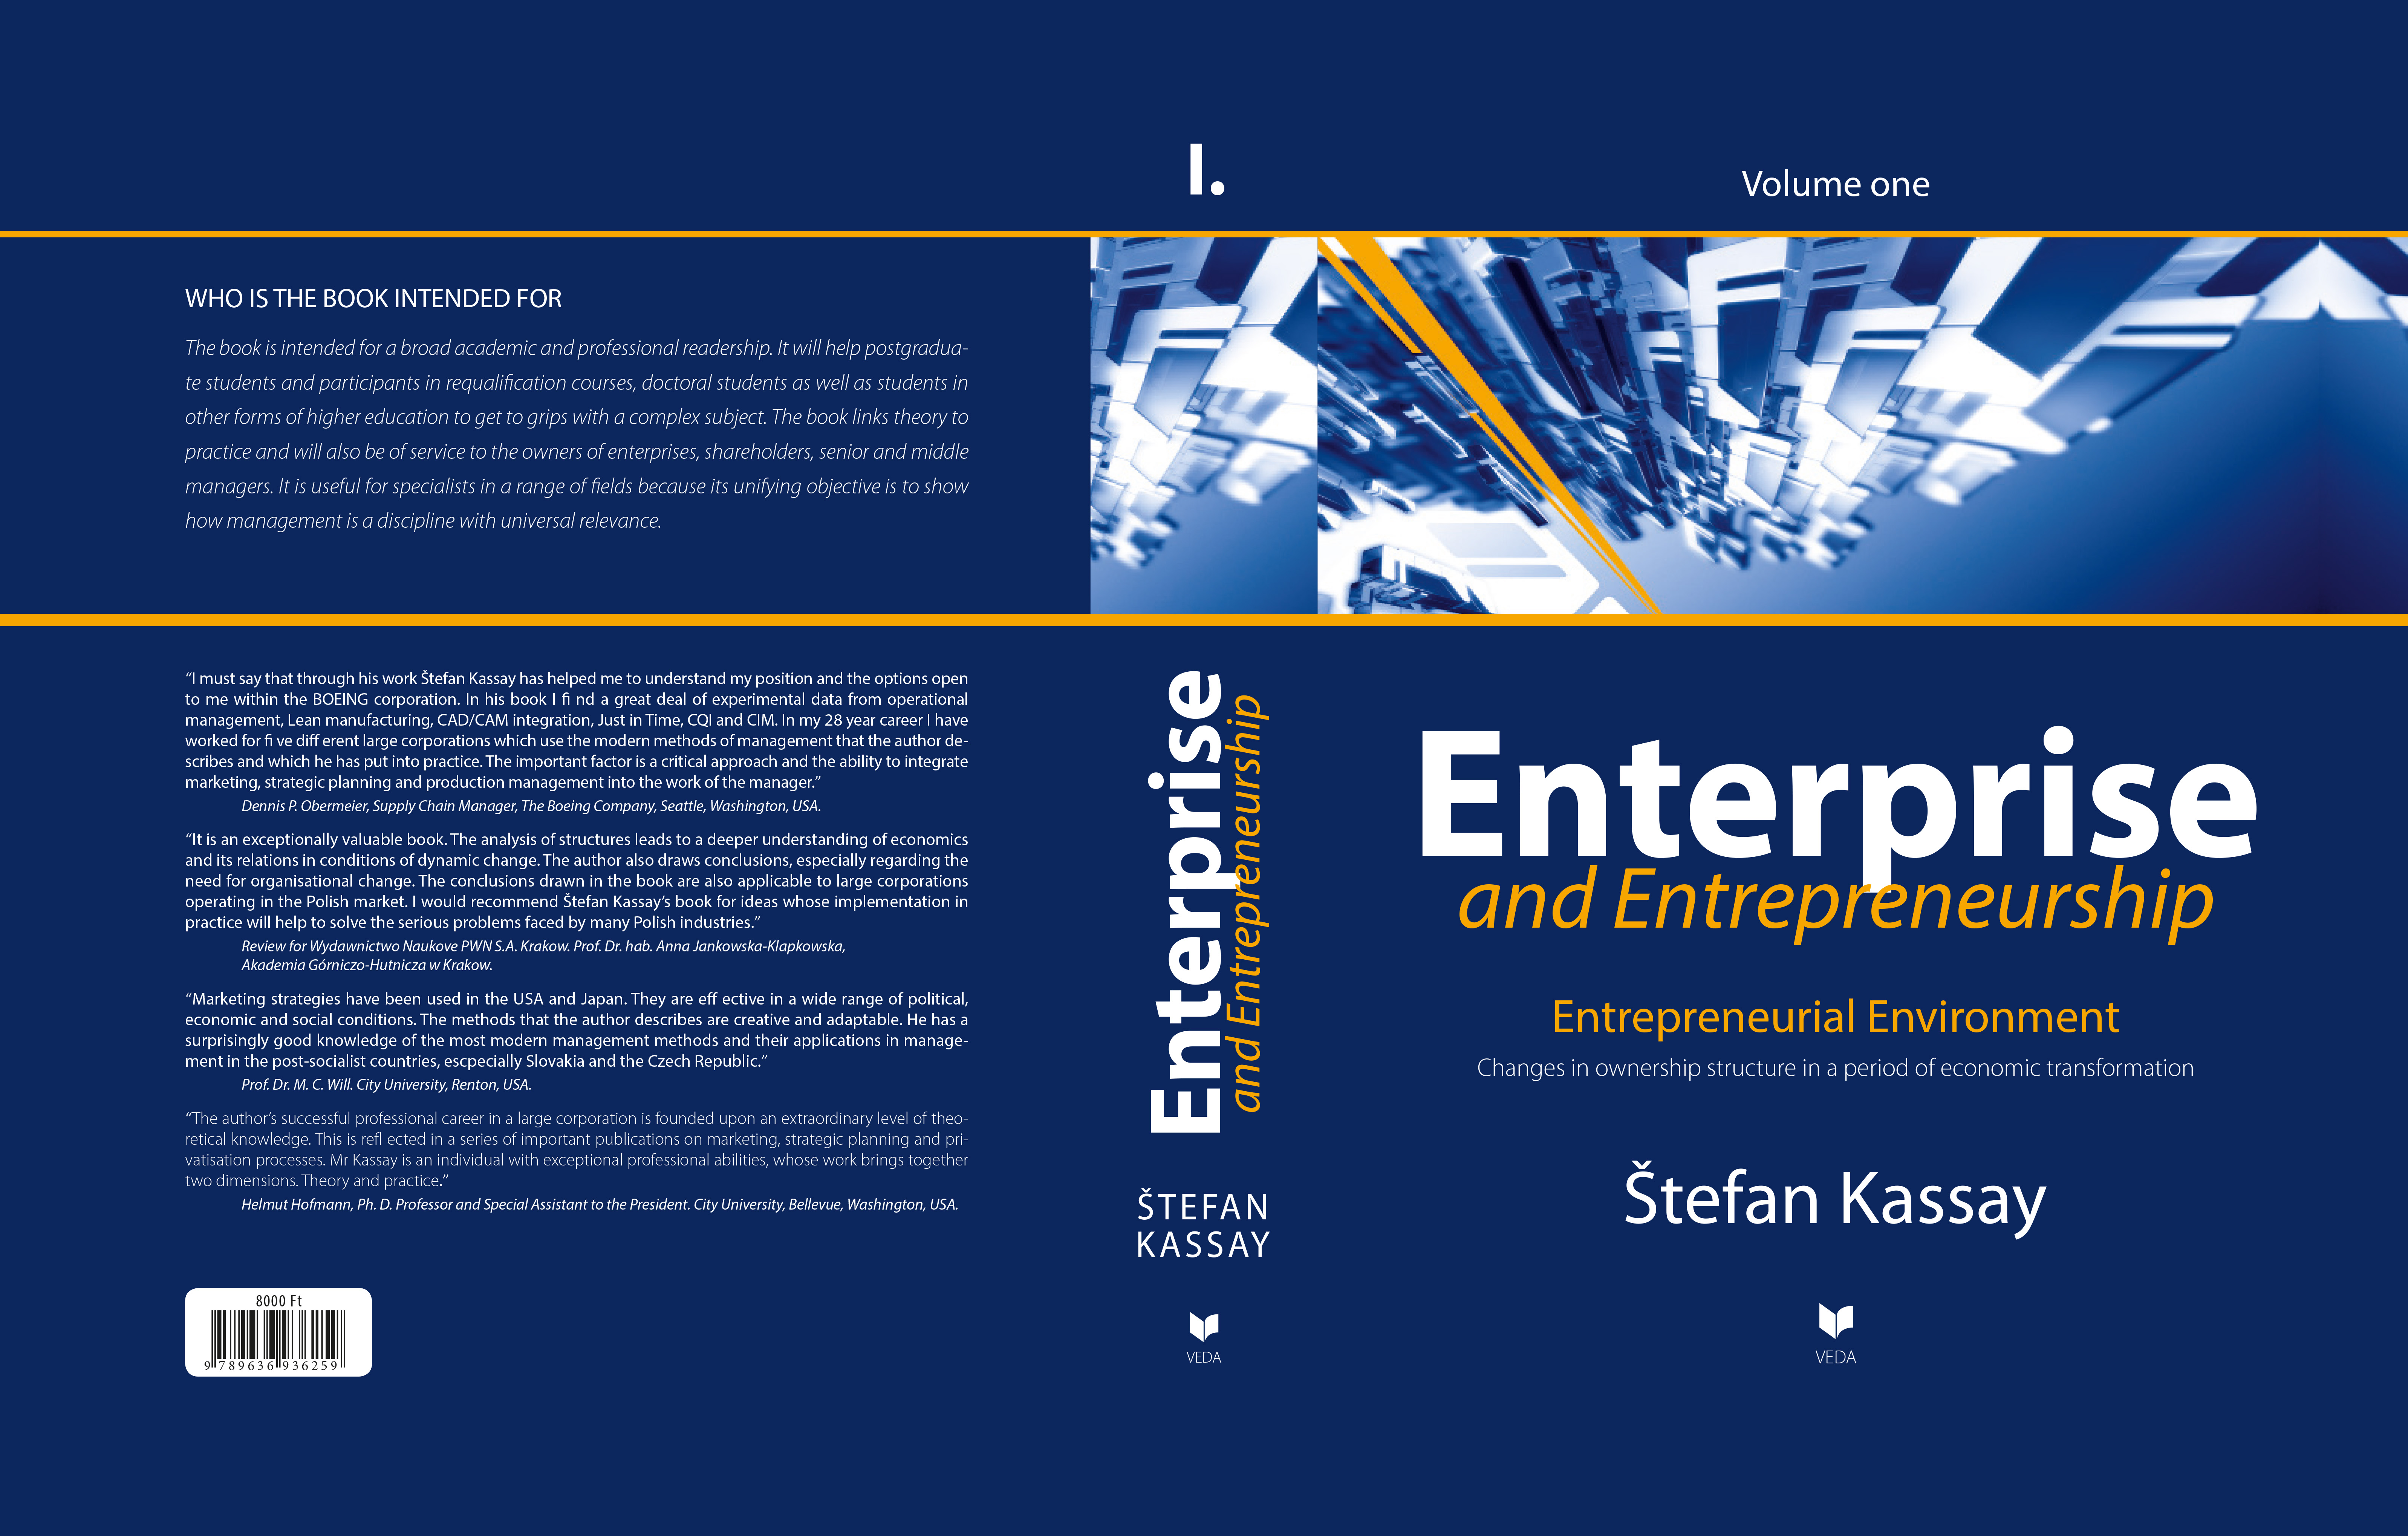 Enterprise and Entrepreneurship: Entrepreneurial Environment